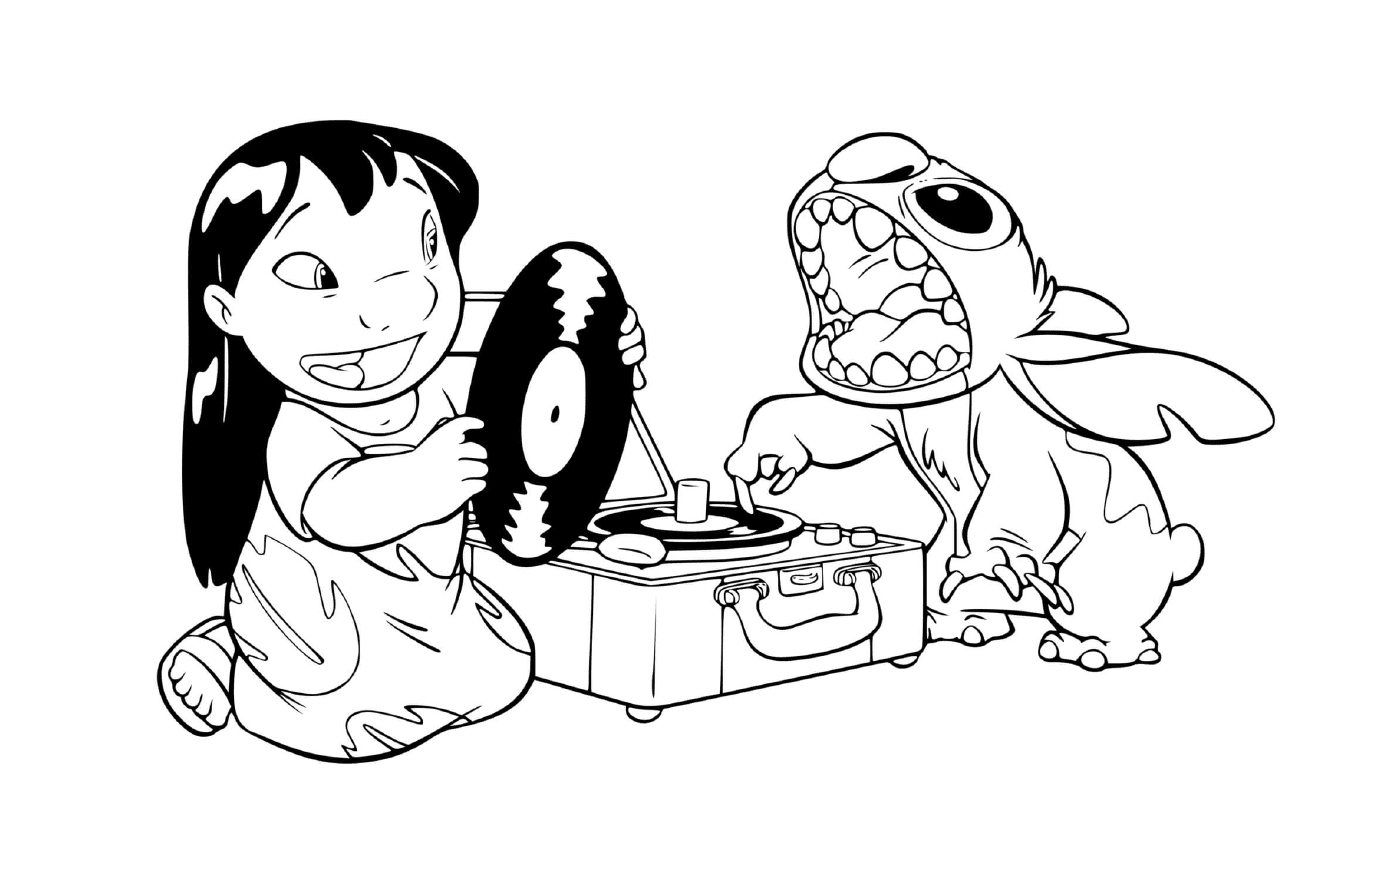  Stitch and Lilo listen to music 